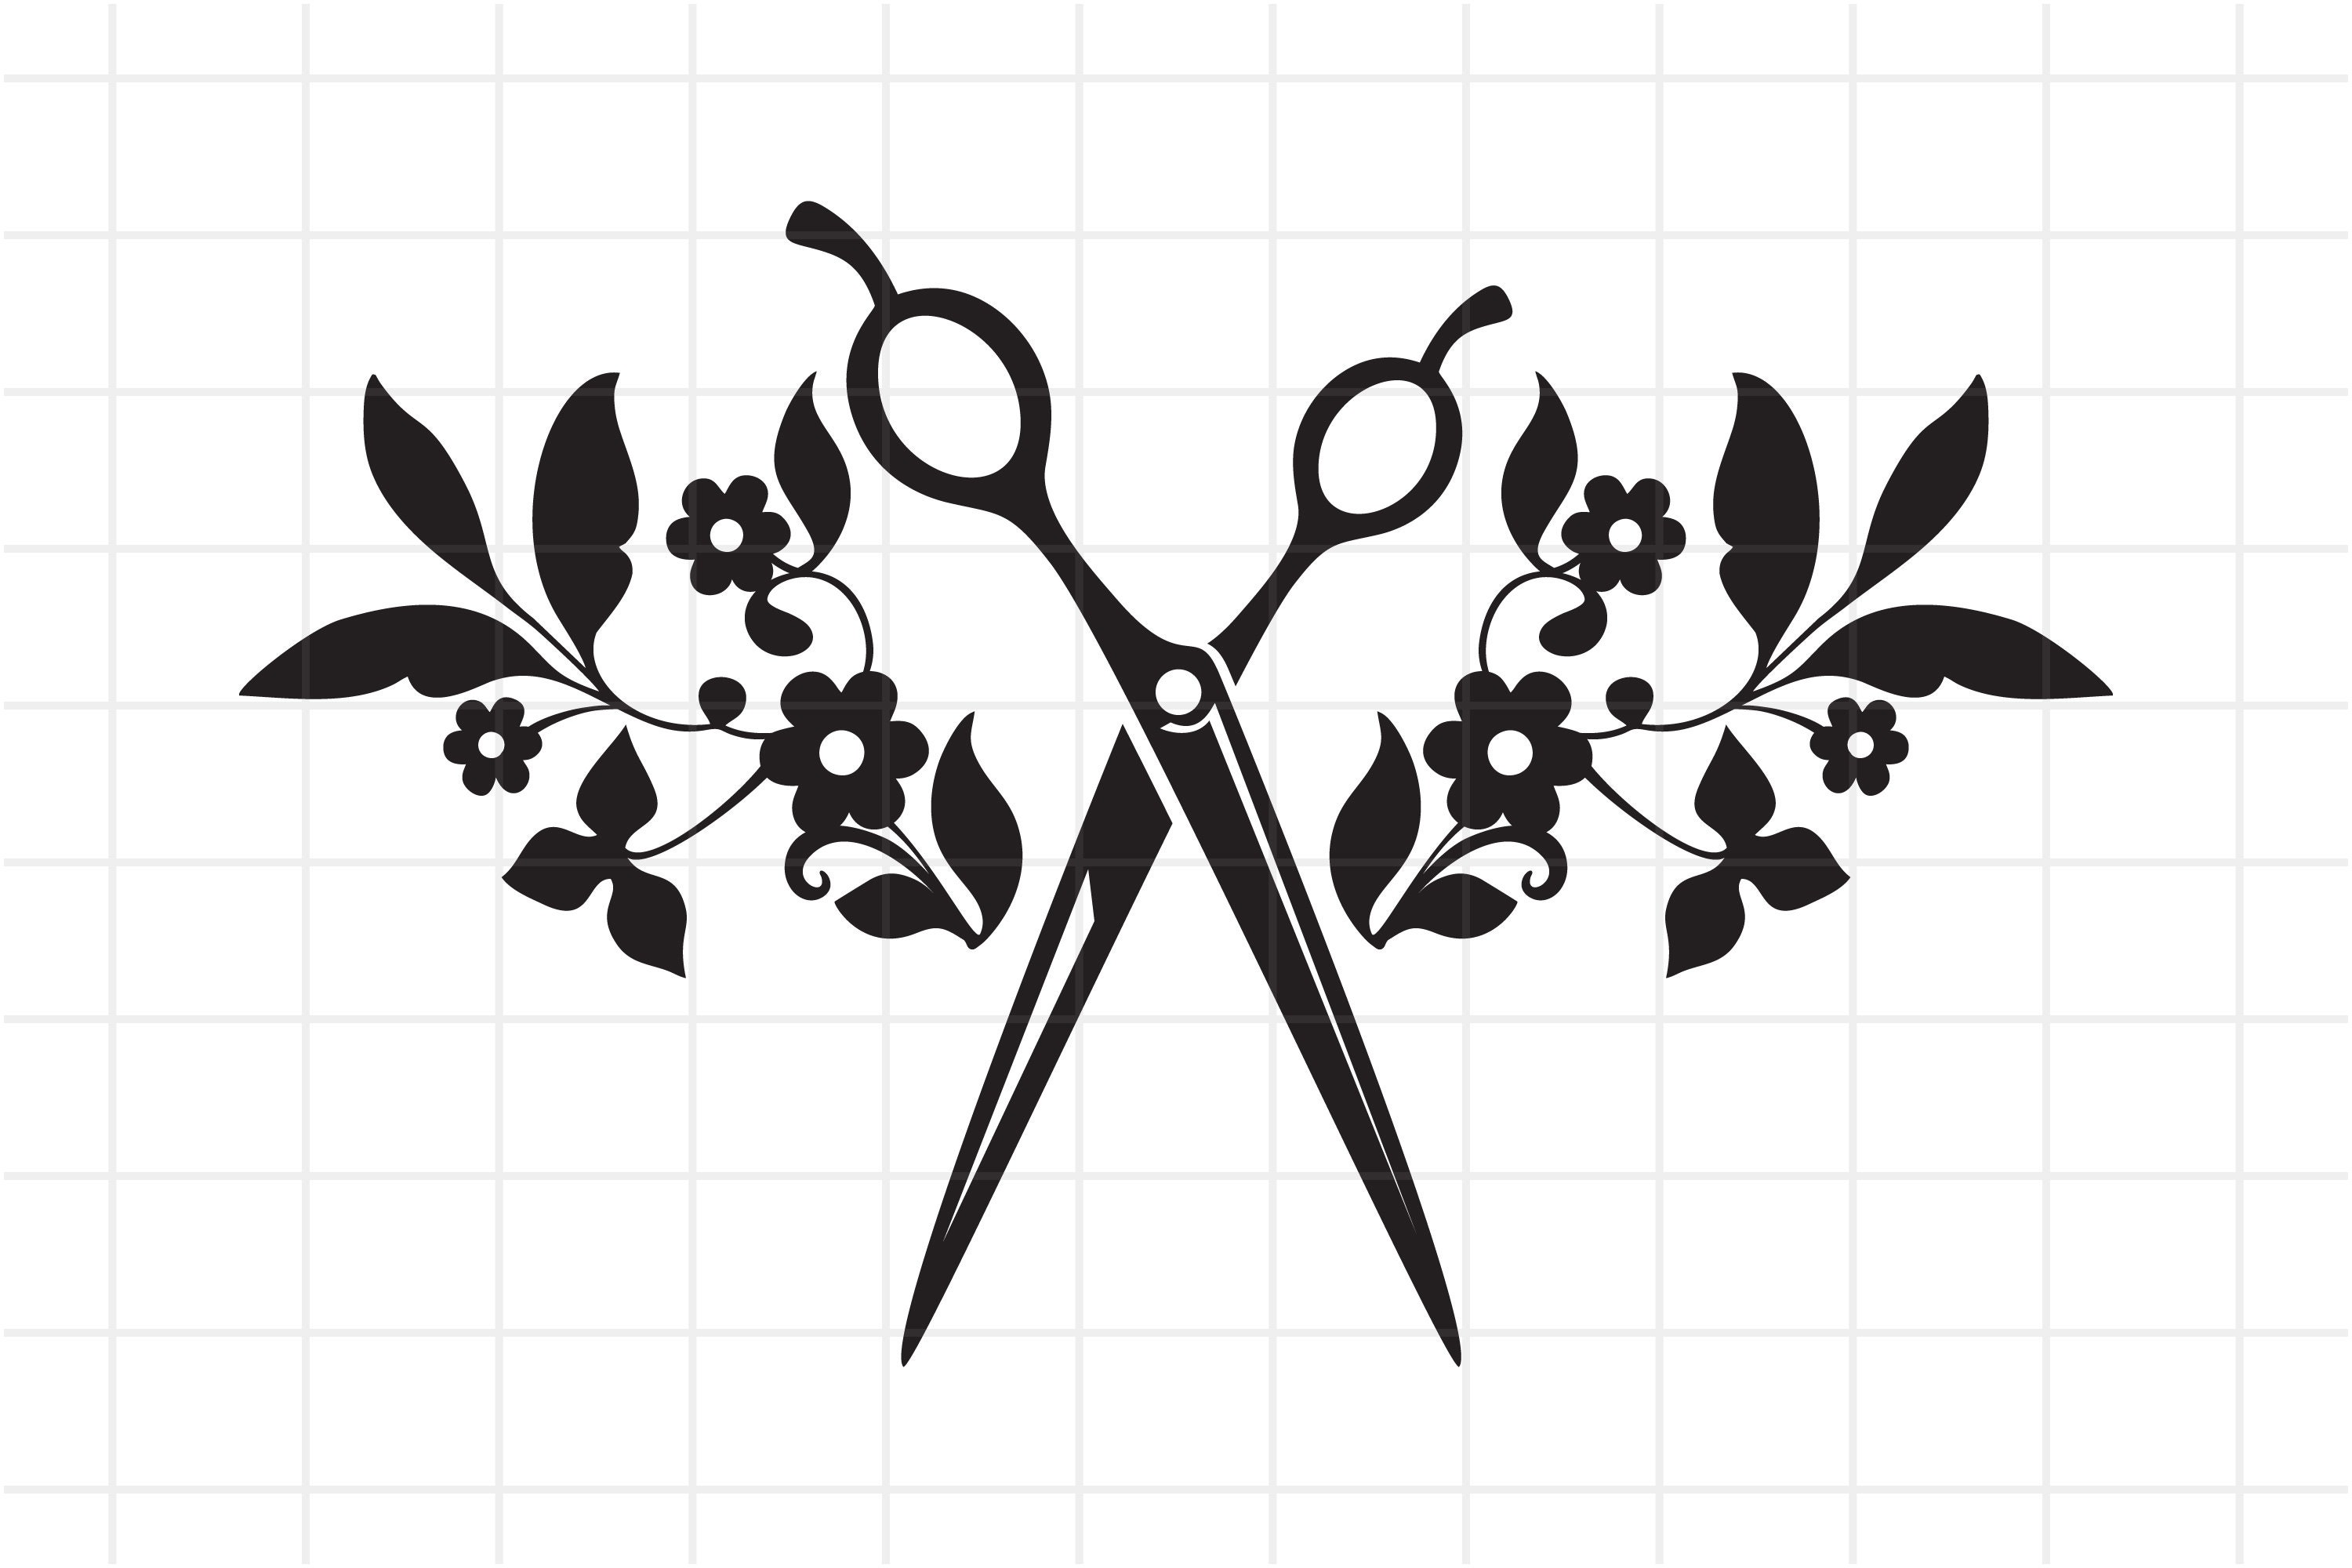 Scissors. Scissors Svg. Svg. JPG. PNG. Vector. Hair Salon Accessories.  Cricut. Scissor Silhouette. Barber Stylish Barbershop Cut Cutting 